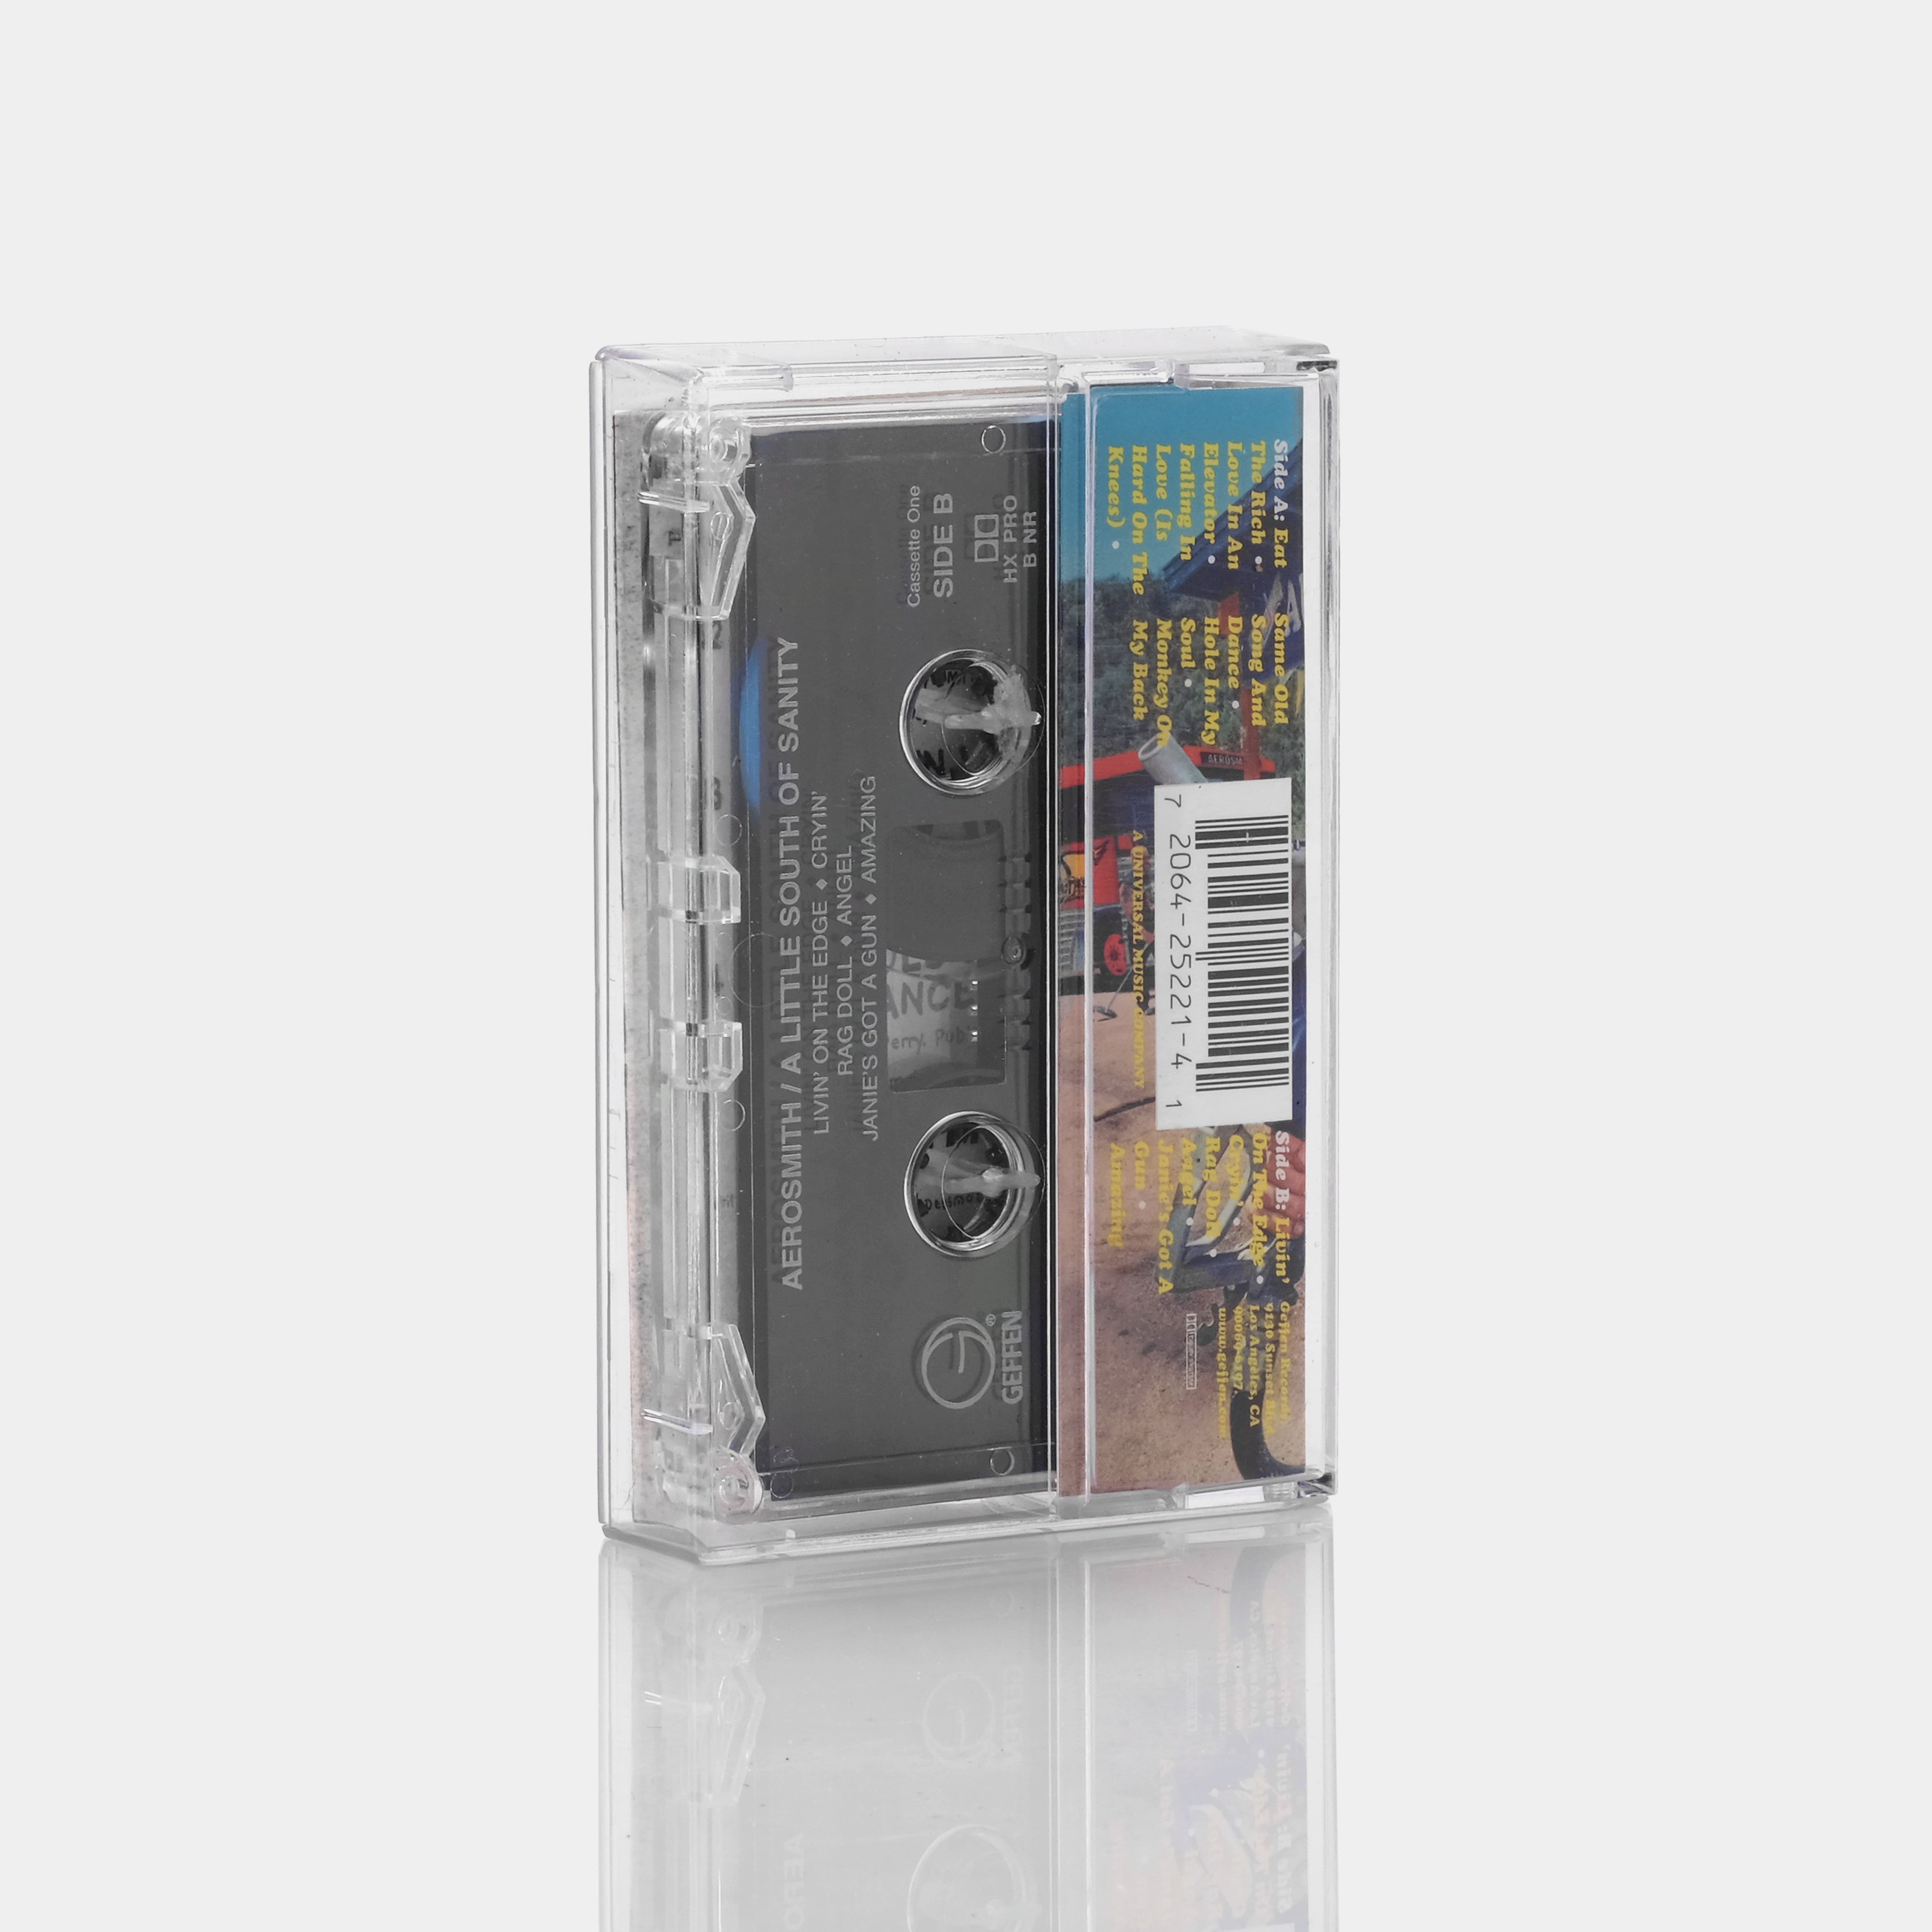 Aerosmith - A Little South Of Sanity (Cassette One) Cassette Tape